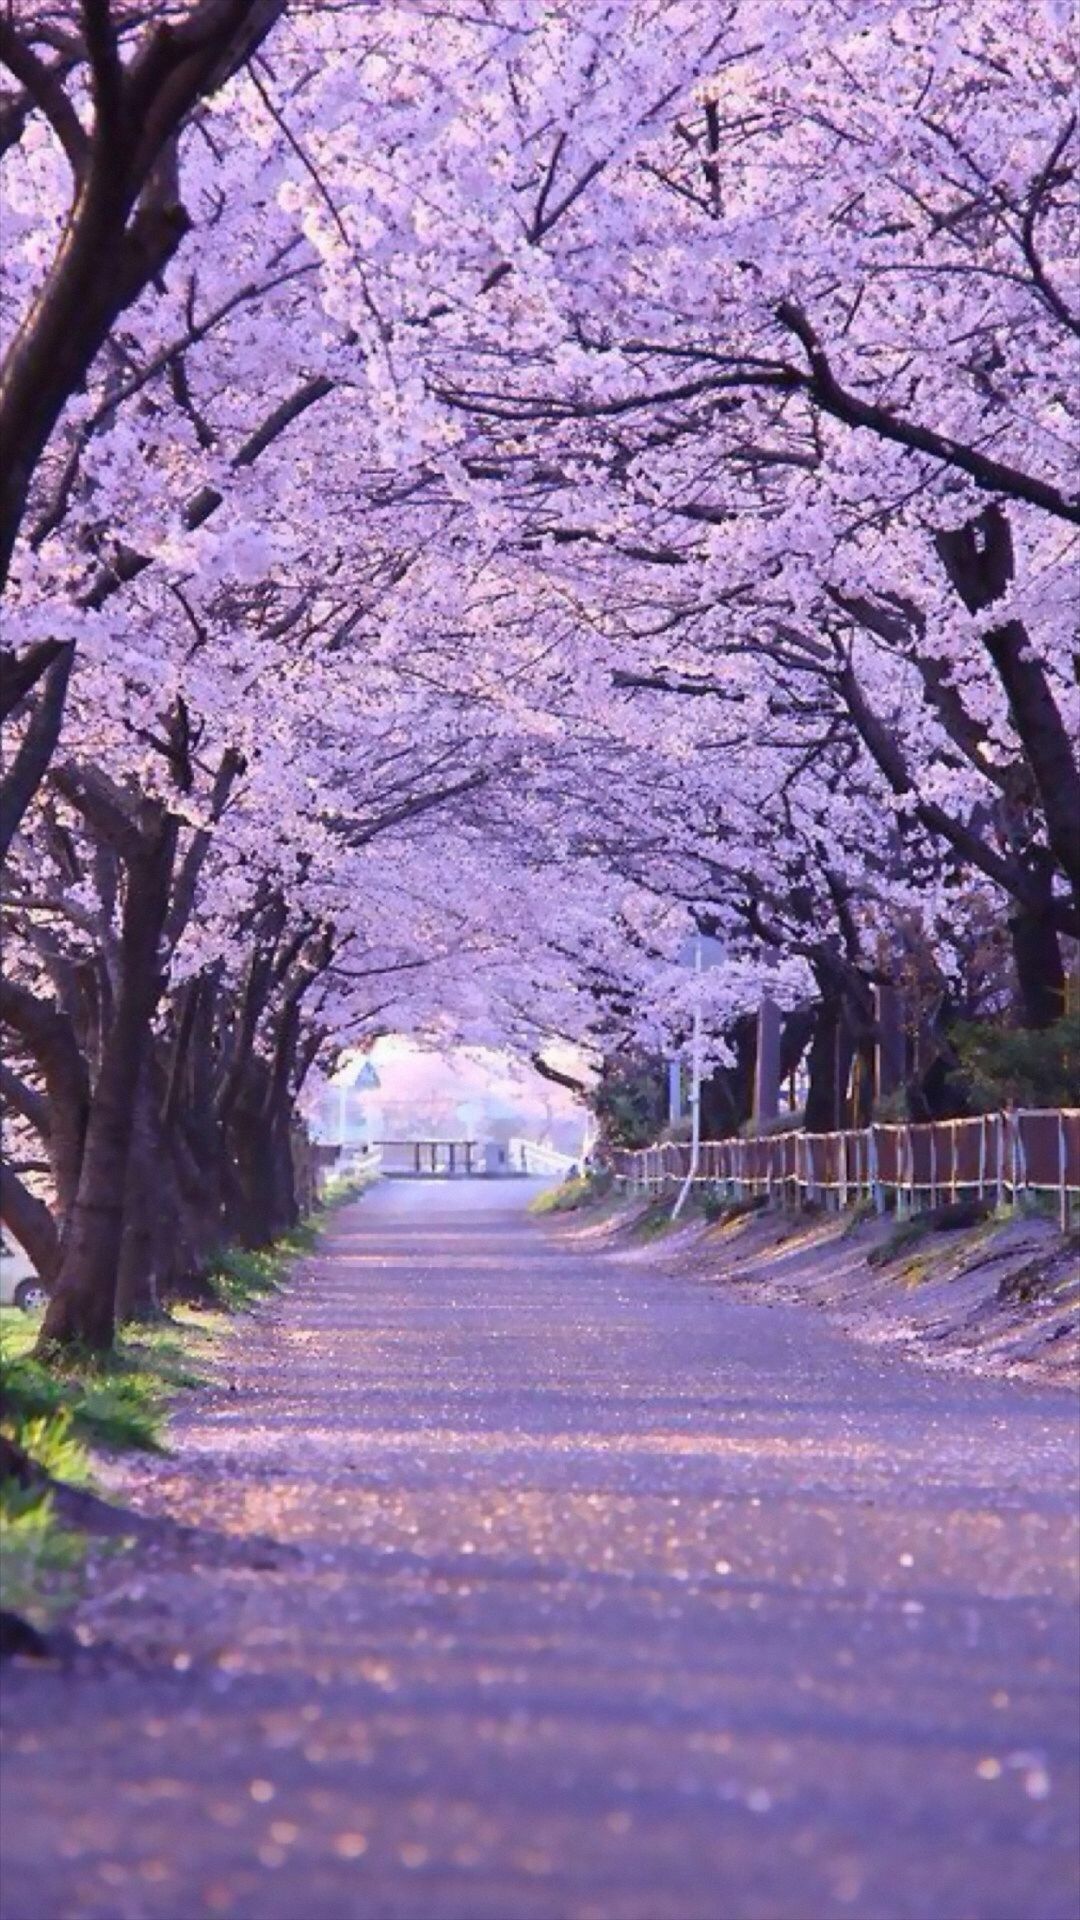 Sakura Blossom Street IPhone 6 Wallpaper Download. IPhone Wallpaper, IPad Wallpaper One Stop Download. Beautiful Places, Nature, Scenery